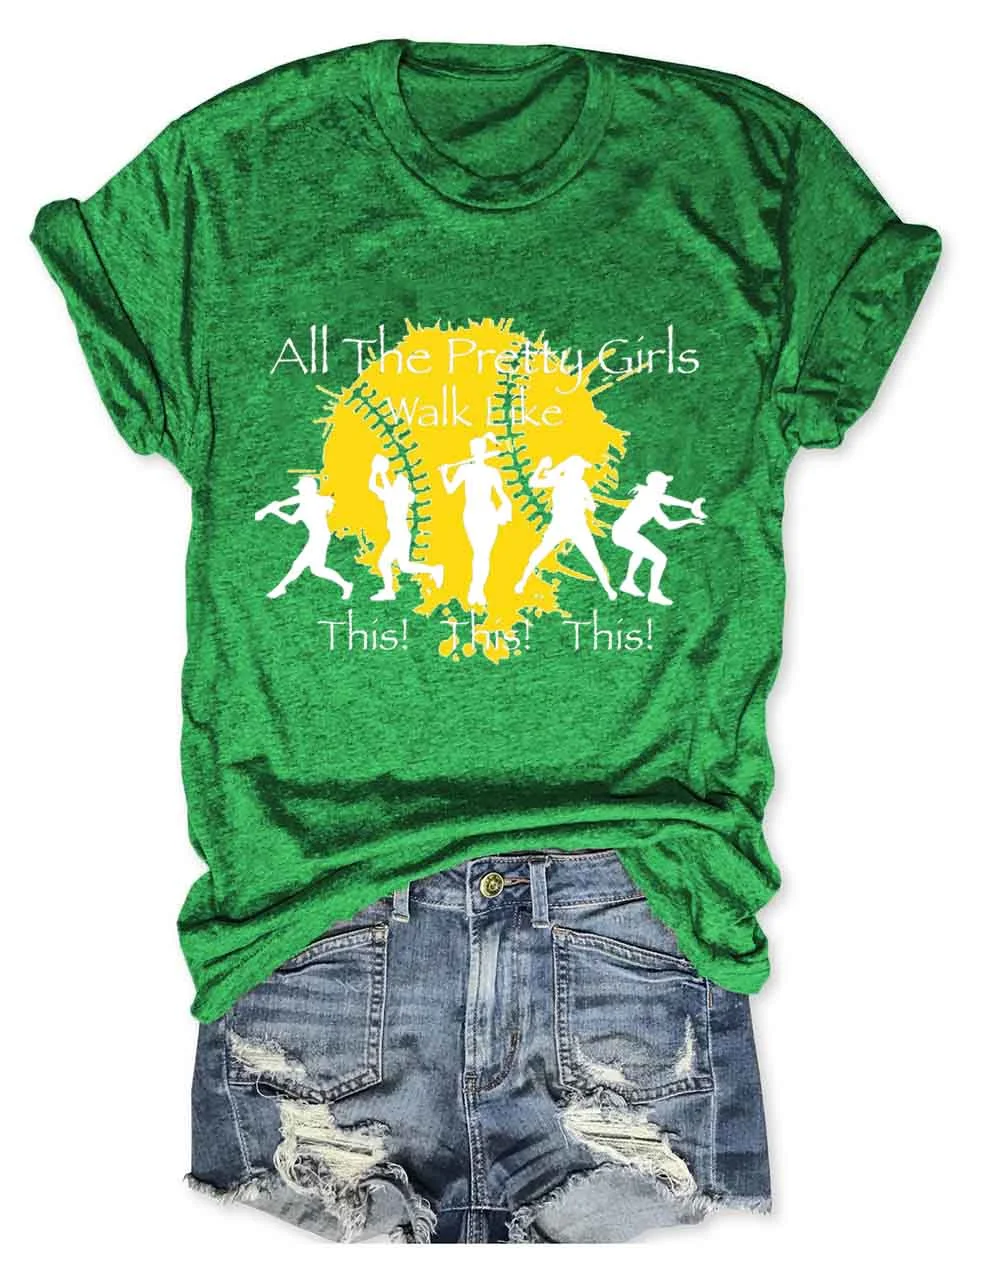 Softball Girls T-Shirt